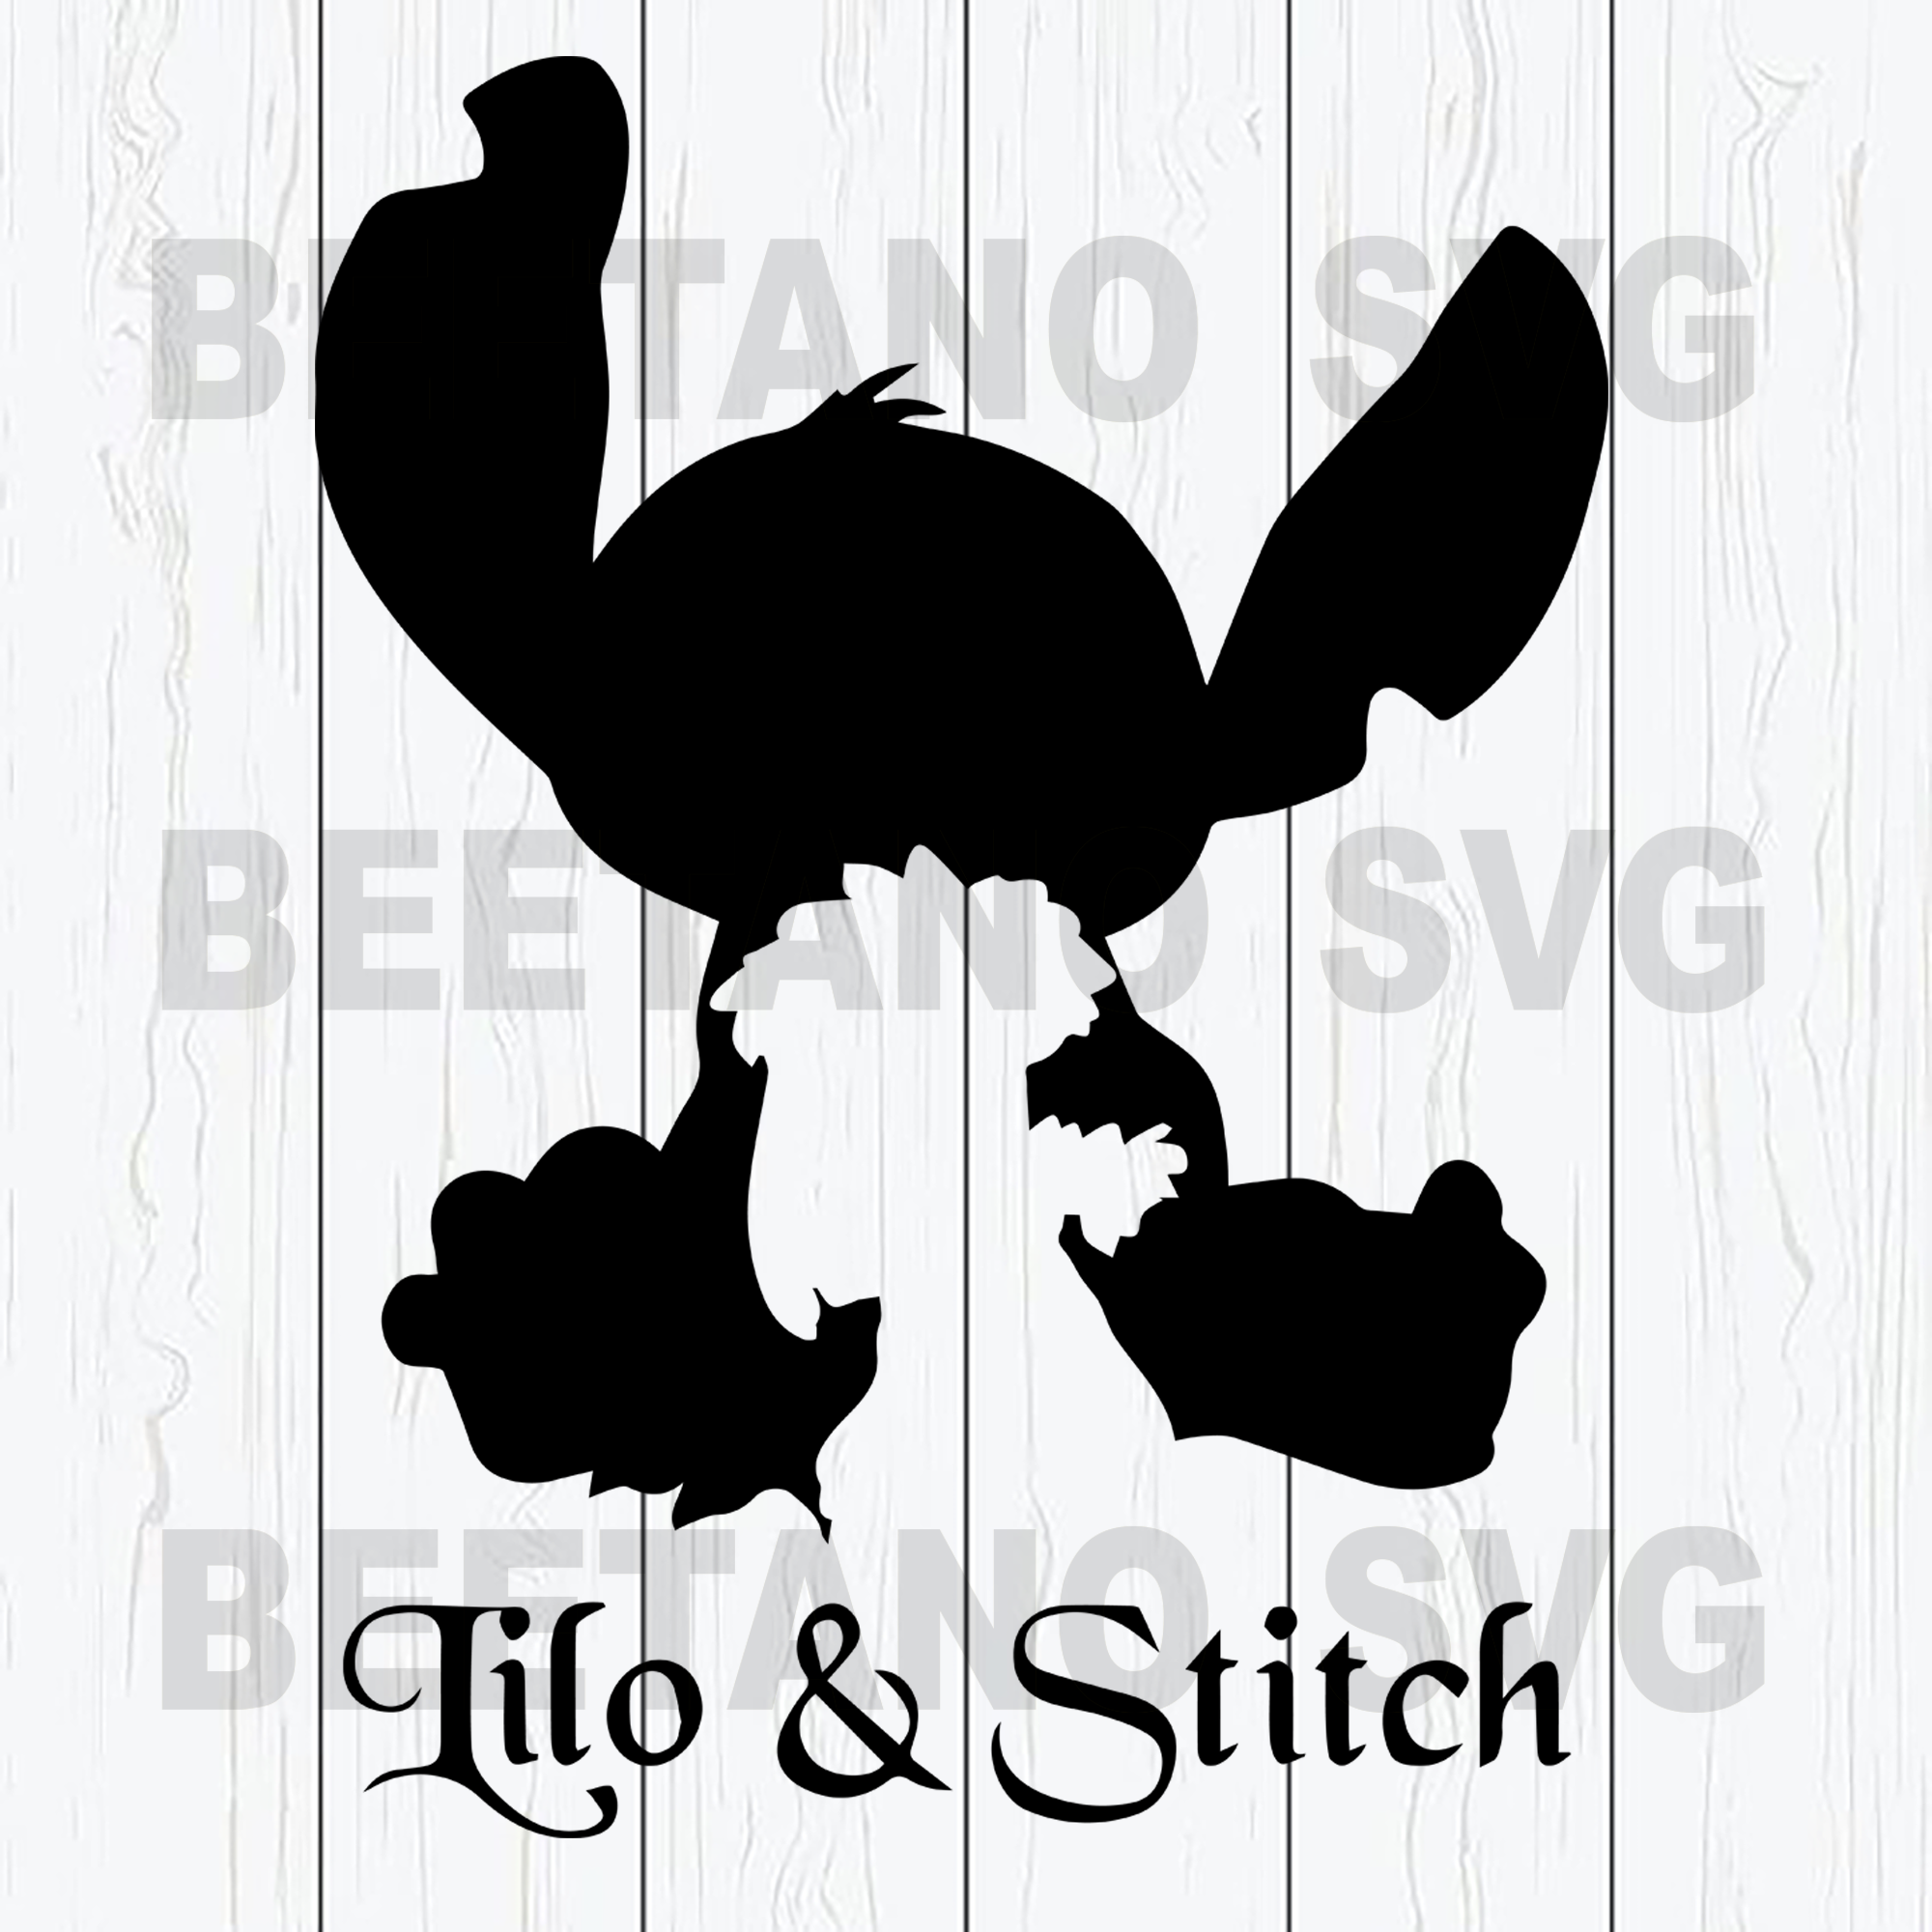 Download Lilo And Stitch Svg Lilo And Stitch Cutting Files Lilo And Stitch Fo Beetanosvg Scalable Vector Graphics